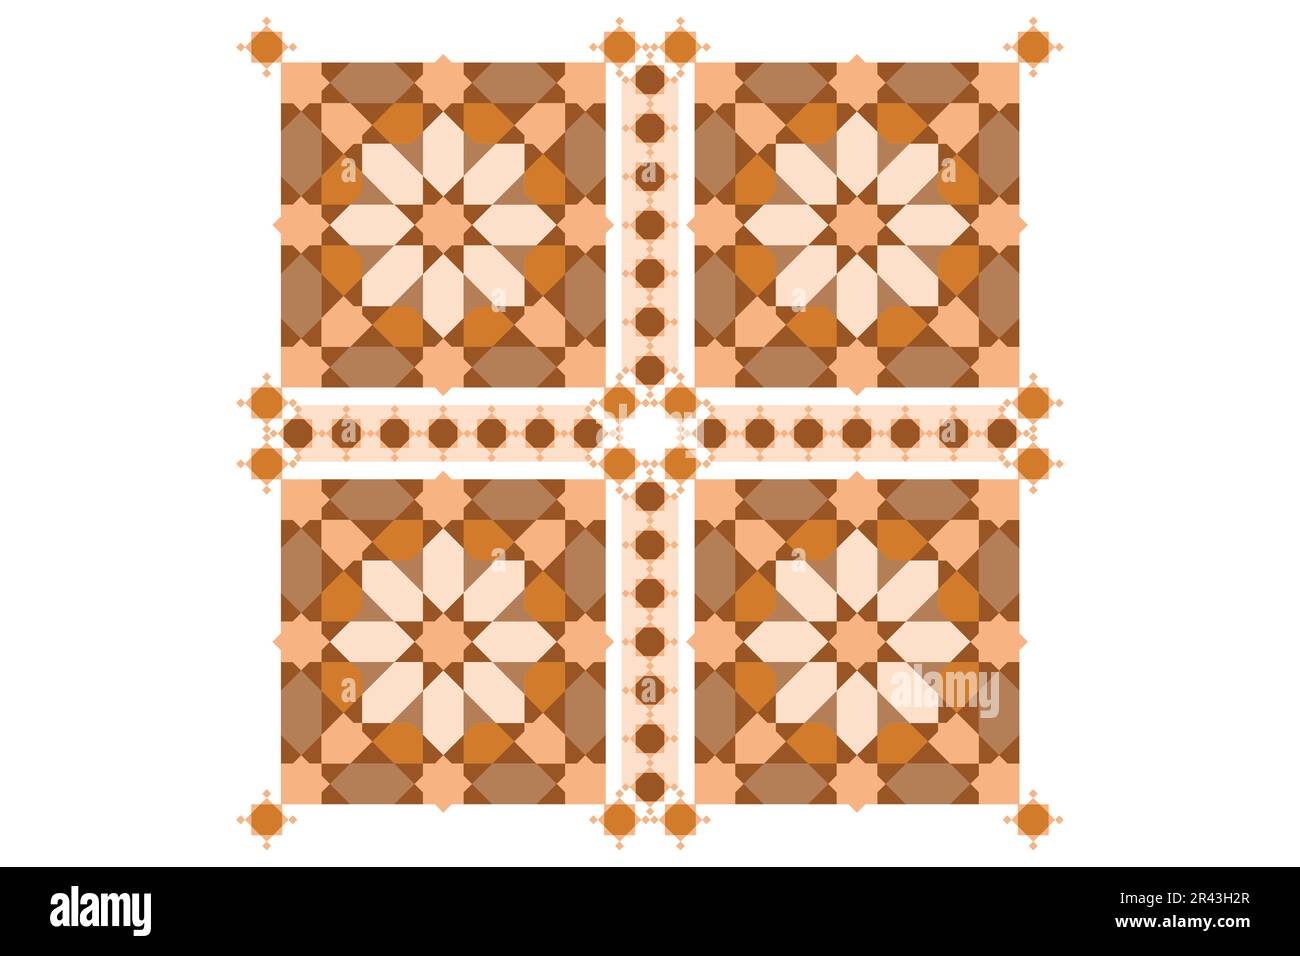 Arabic pattern Vectors. Islamic pattern. Geometric mandala. vintage tiles patterns antique seamless design. Stock Vector